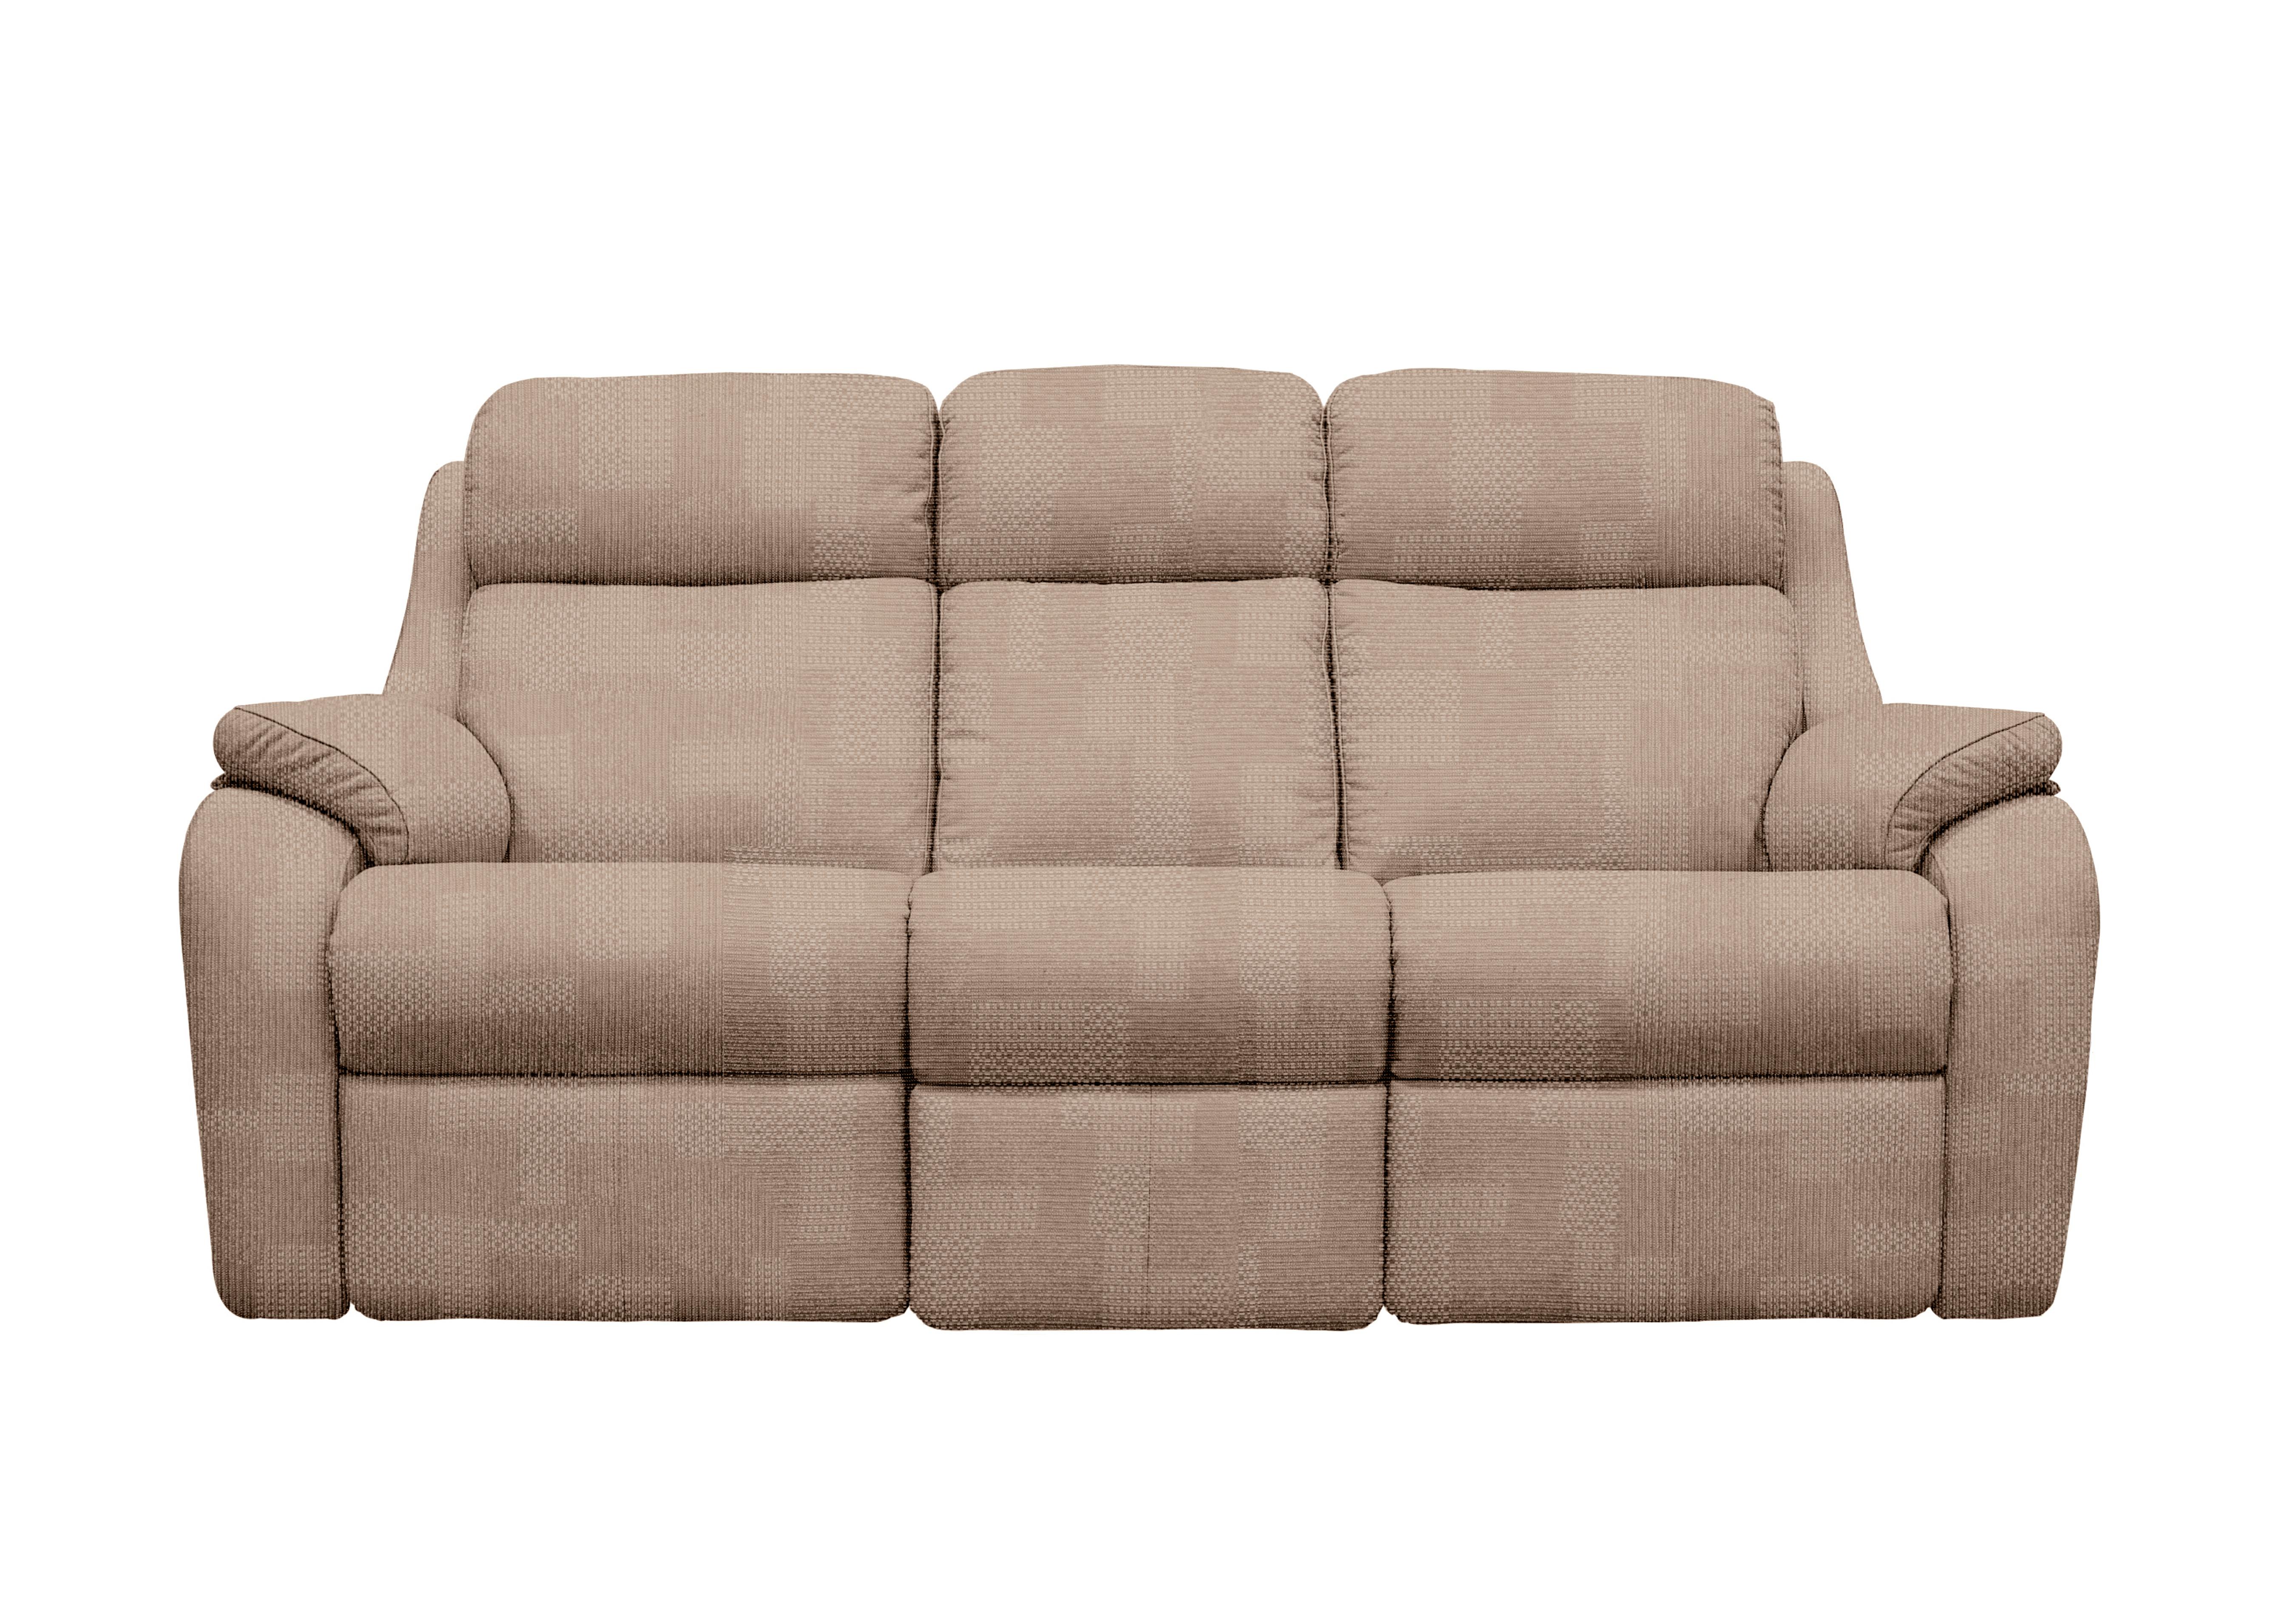 Kingsbury 3 Seater Fabric Sofa in A800 Faro Sand on Furniture Village